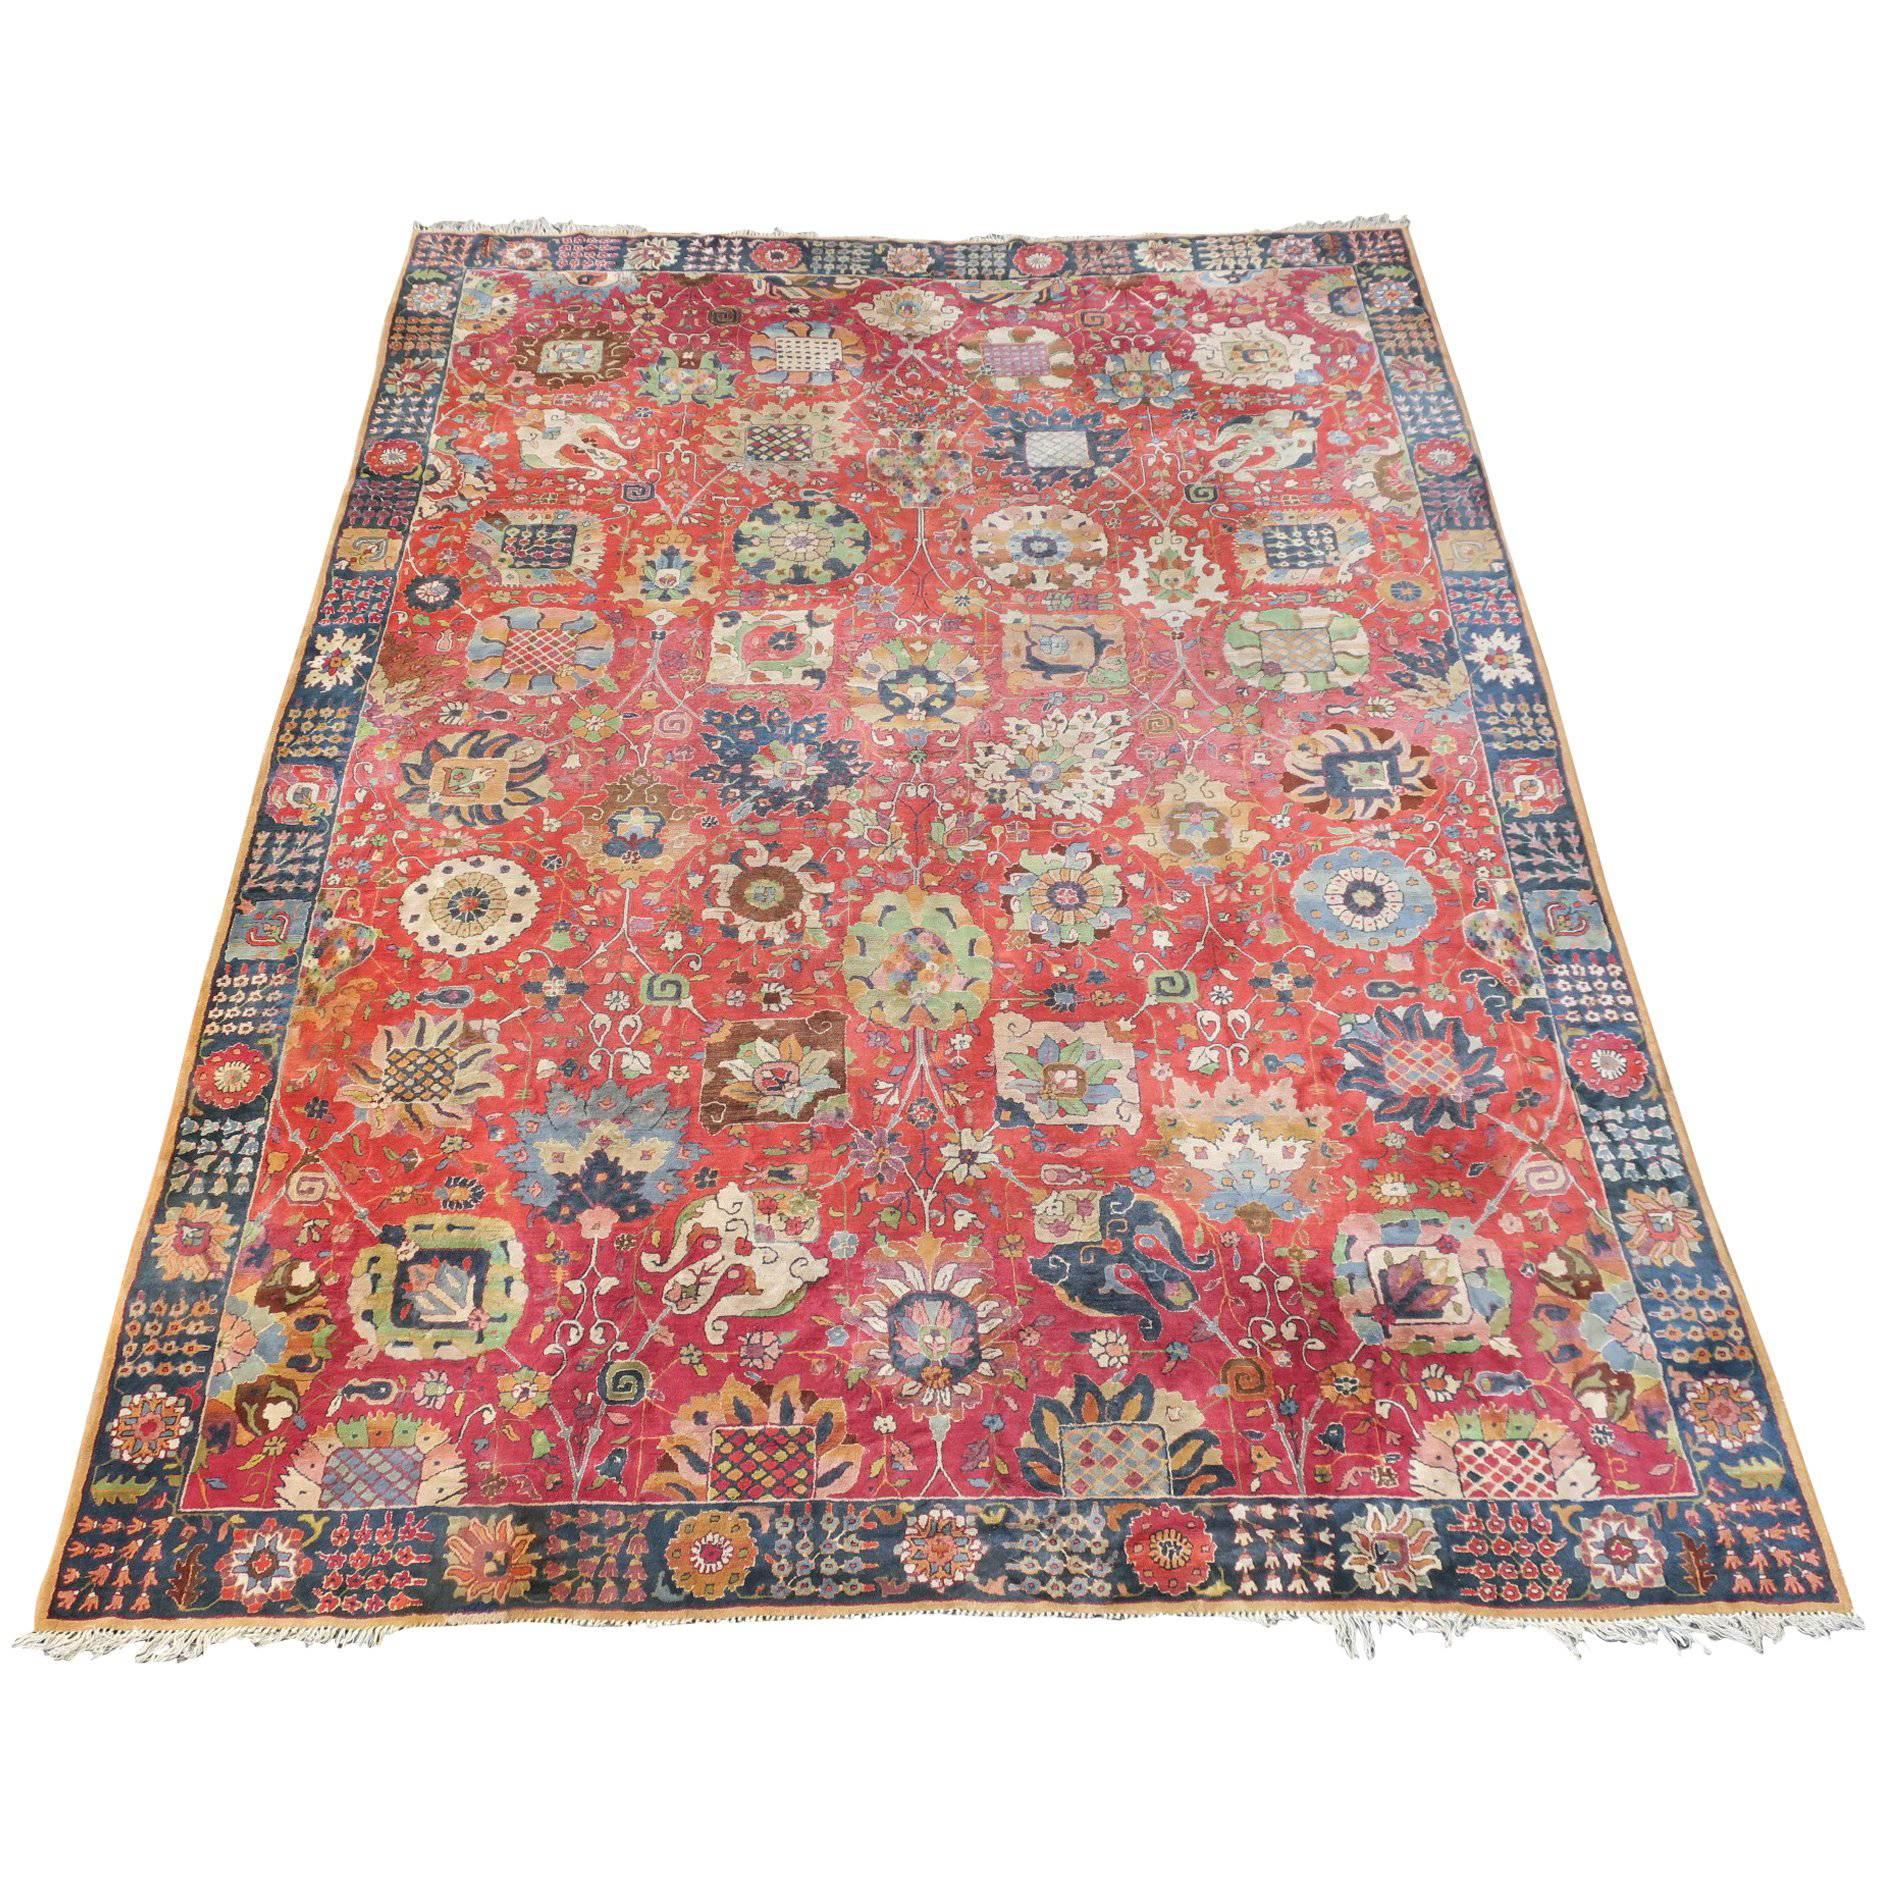 Antique European Hooked Carpet with Big Shah Abbas Design, 1920